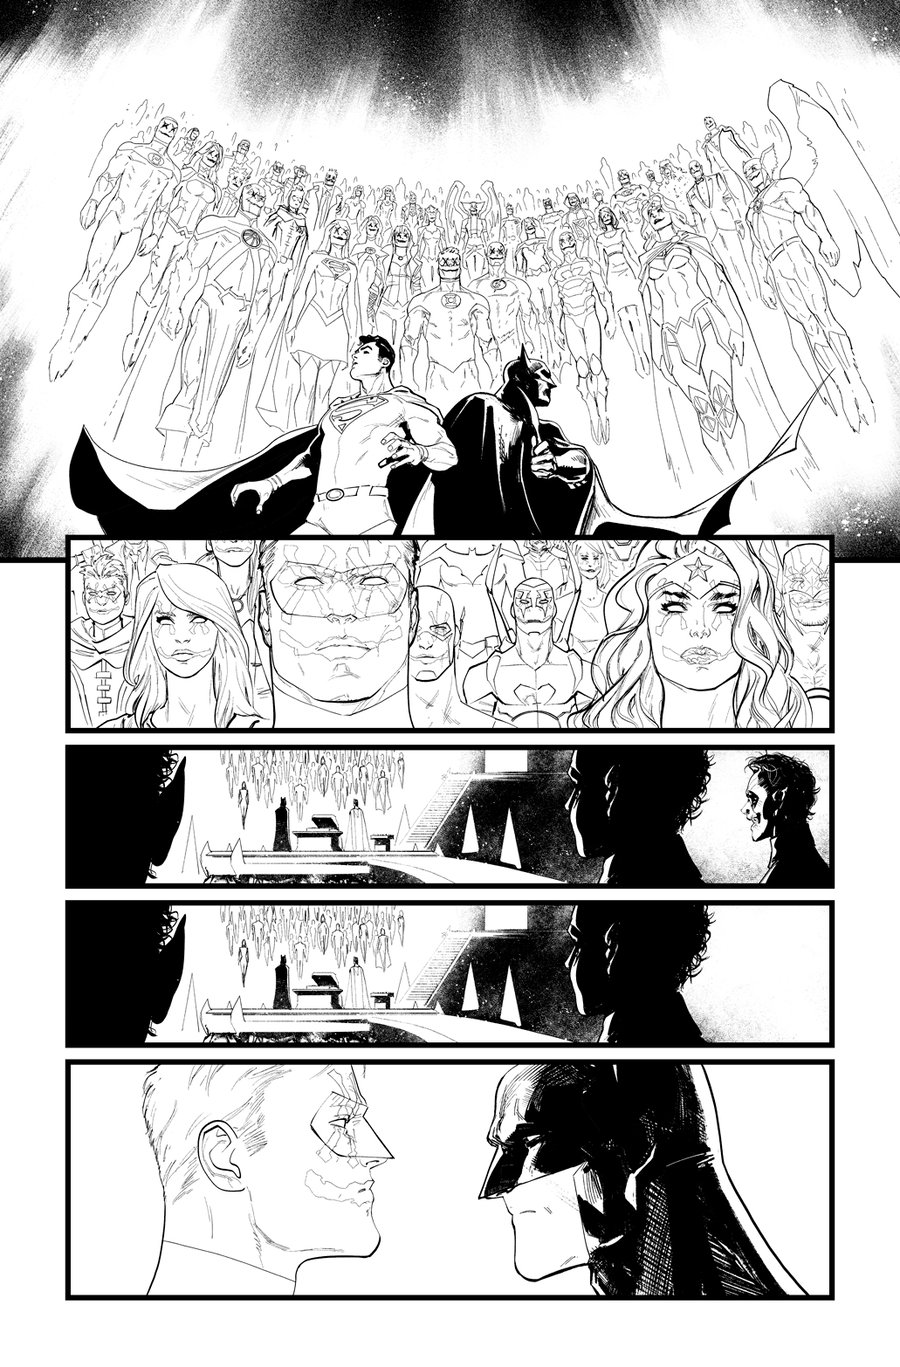 Image of BATMAN/SUPERMAN #1 p.17 ARTIST'S PROOF